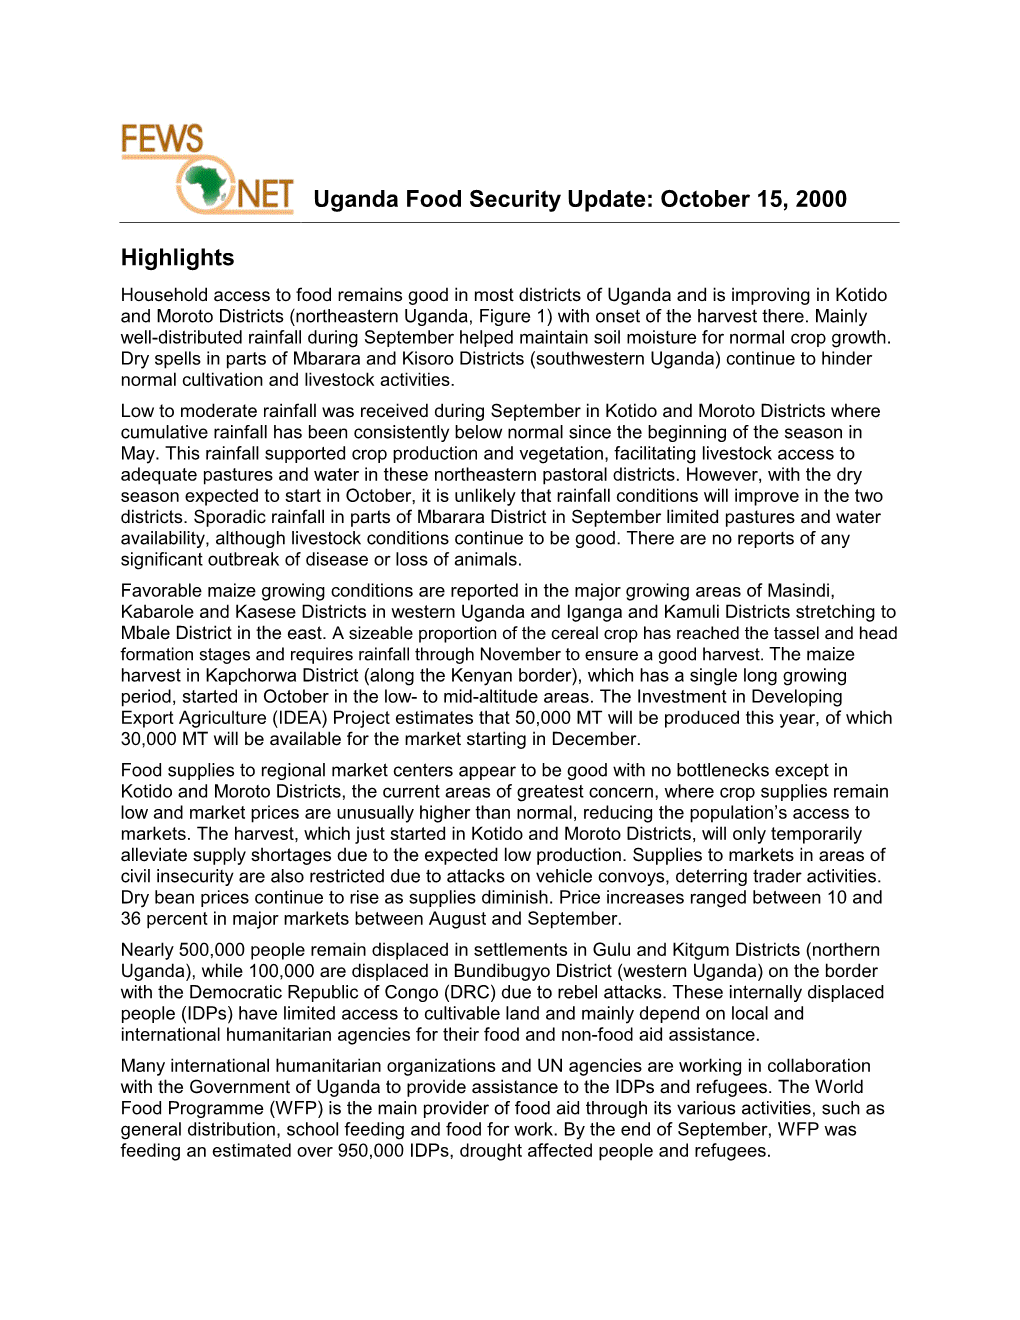 Highlights Uganda Food Security Update: October 15, 2000